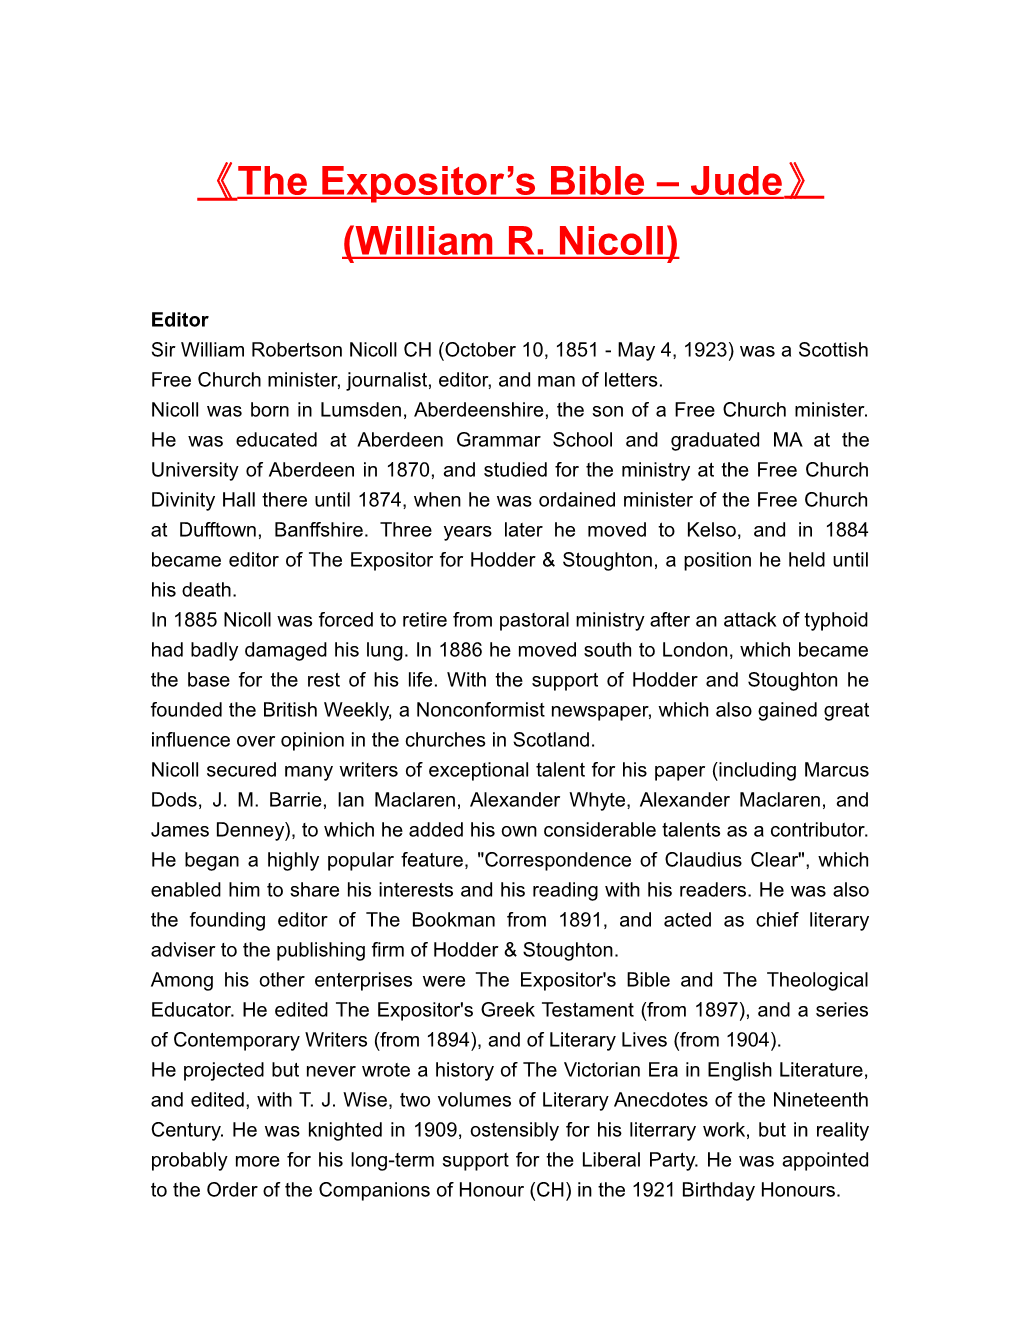 The Expositor S Bible Jude (William R. Nicoll)